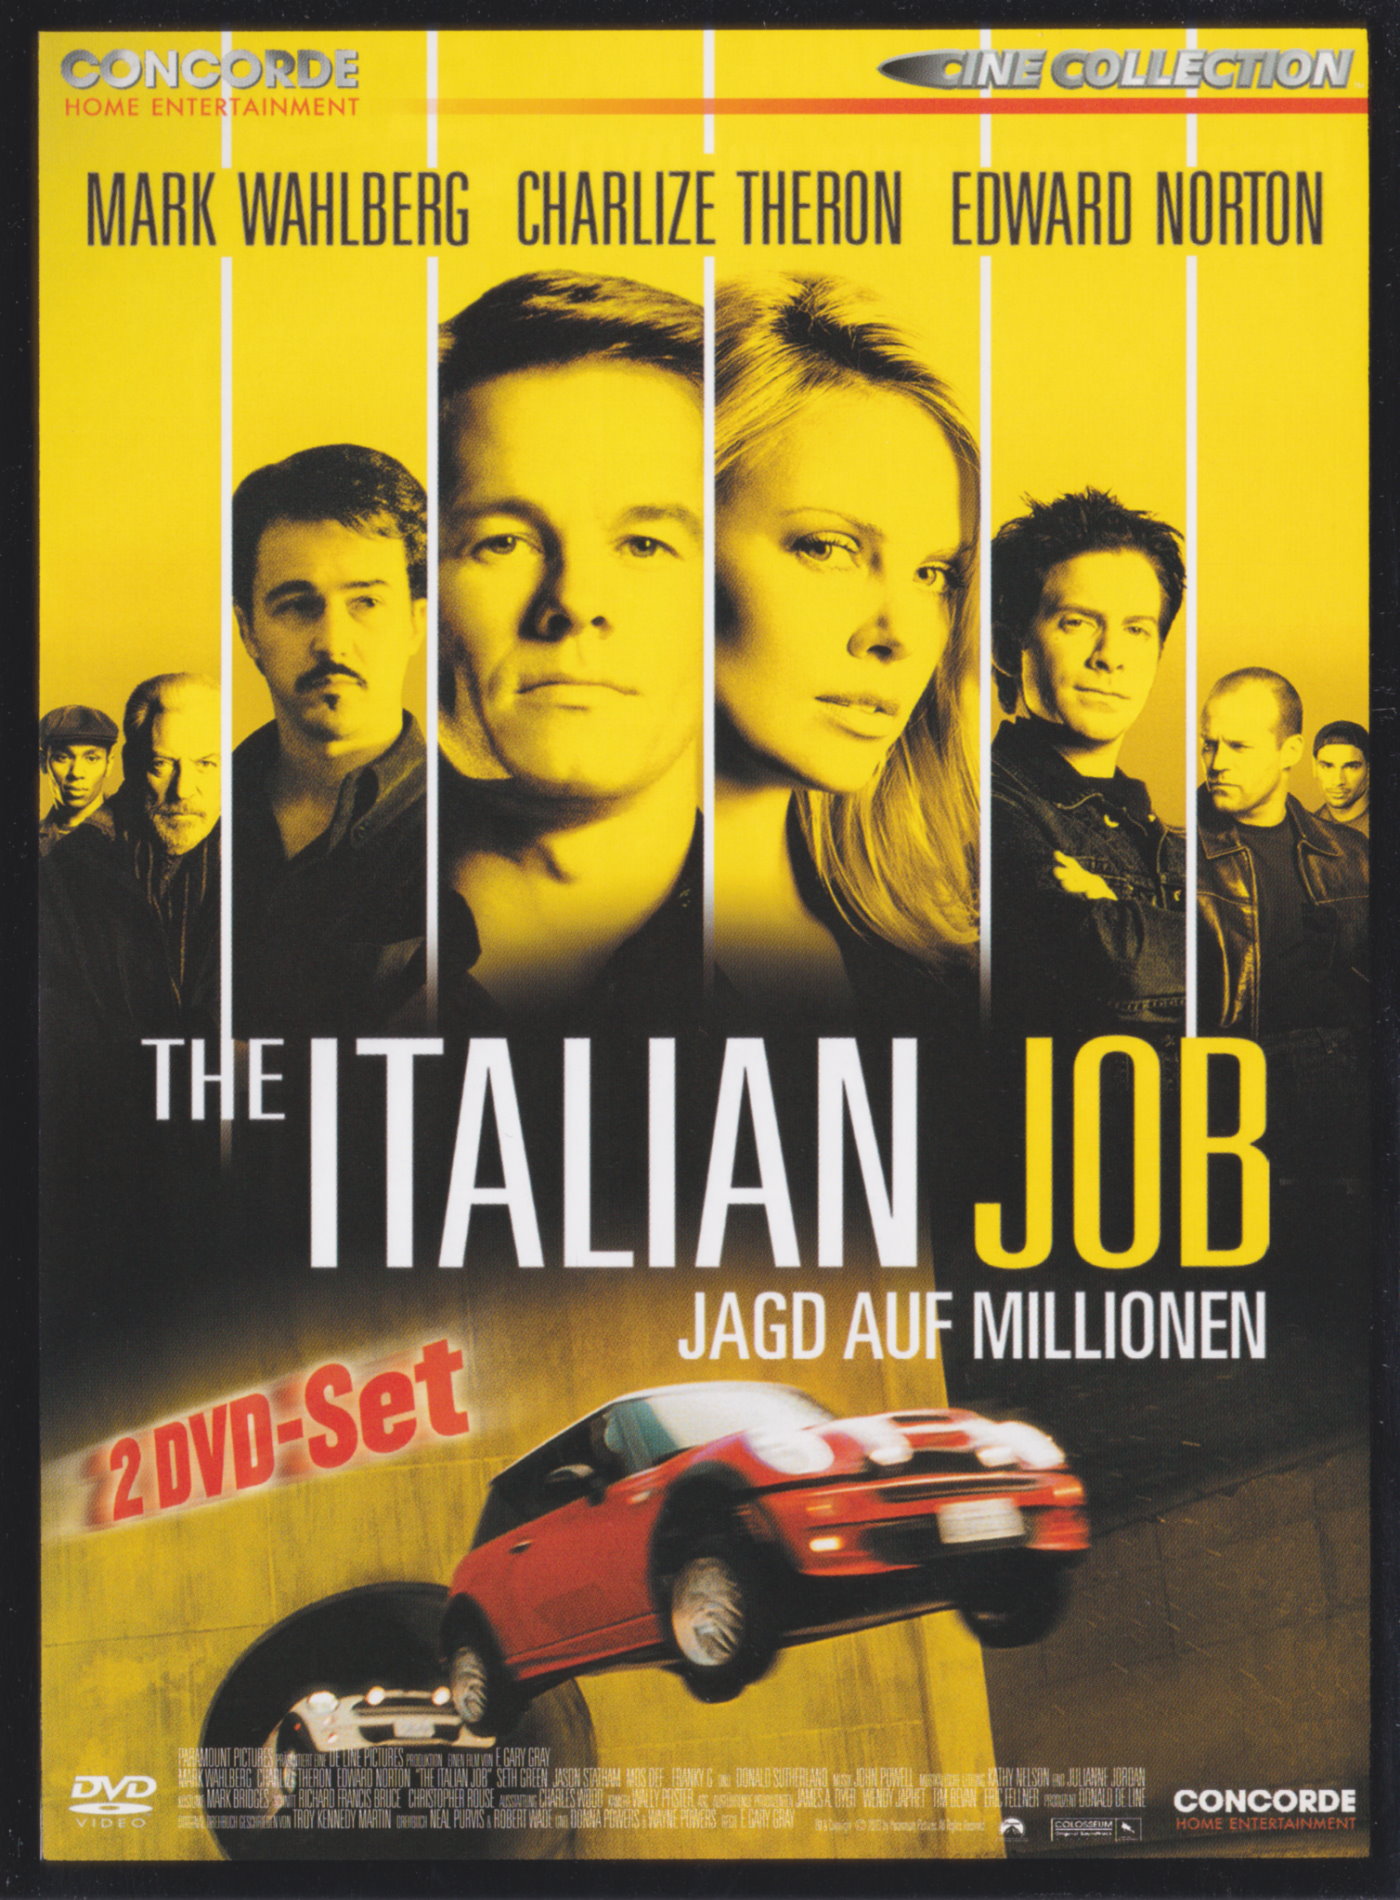 Cover - The Italian Job - Jagd auf Millionen.jpg